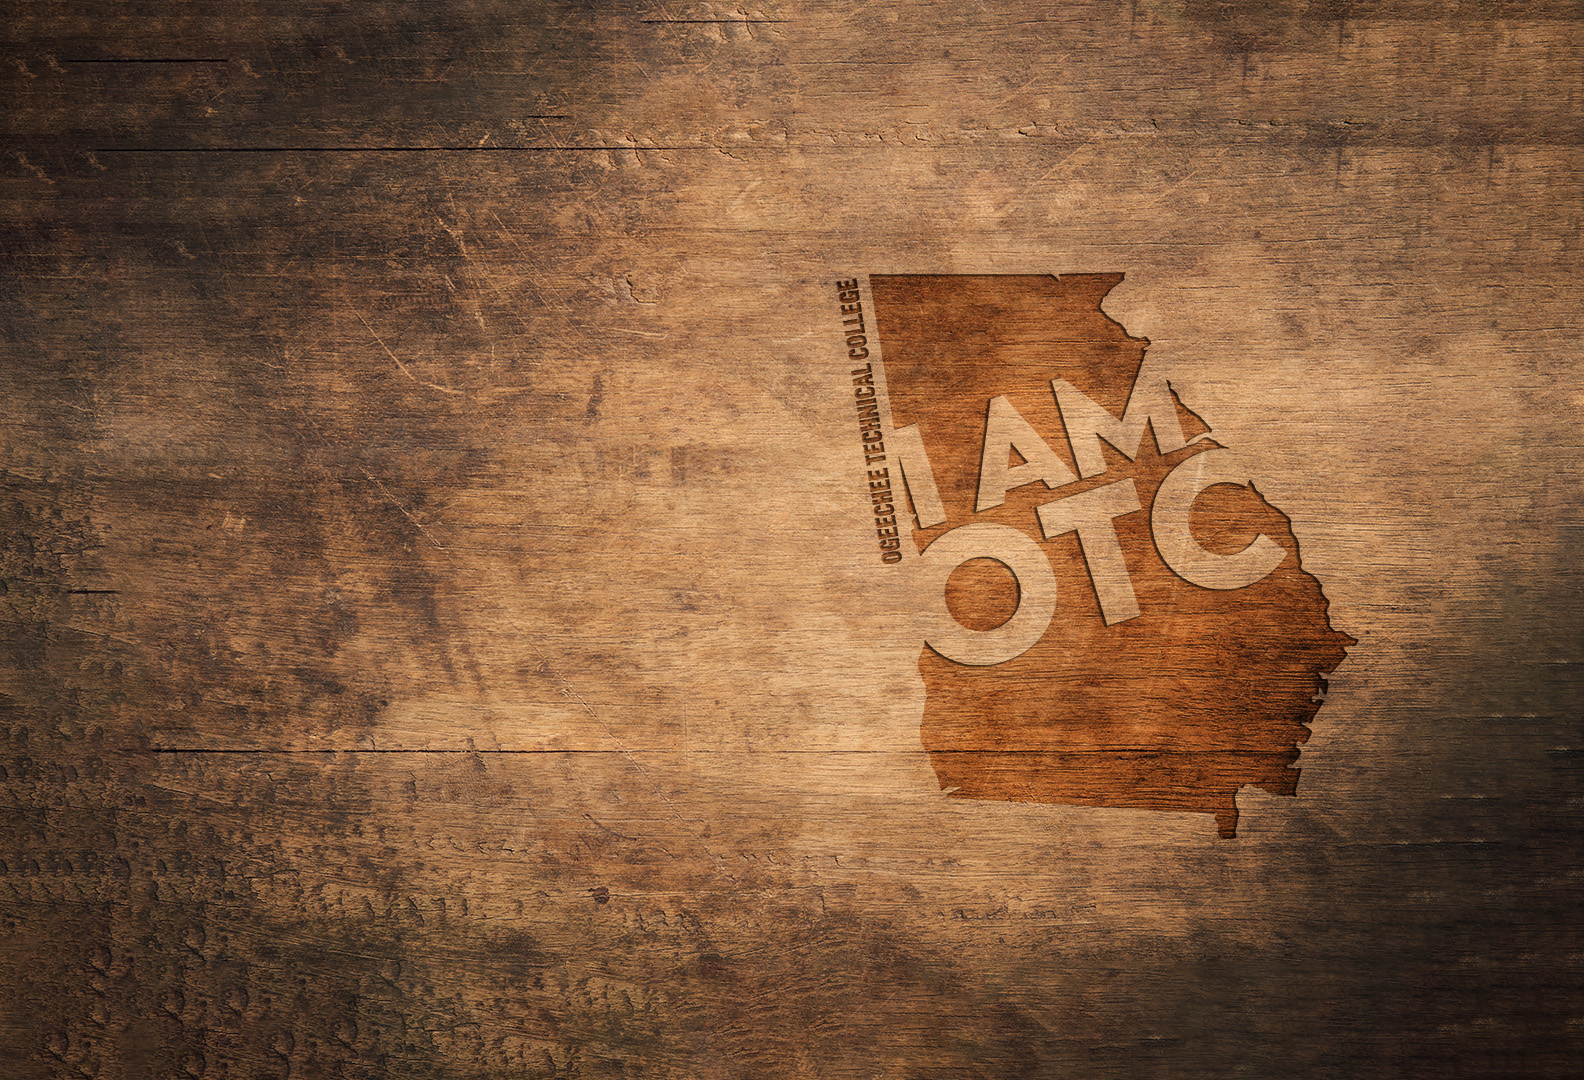 I am OTC